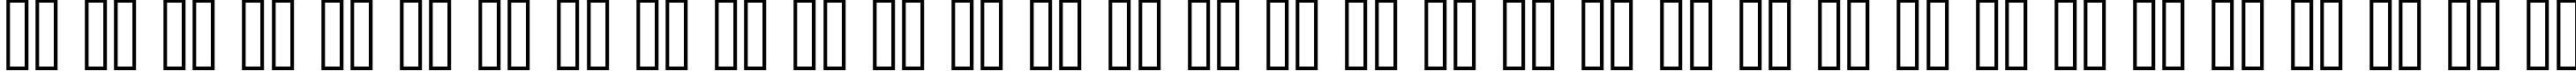 Пример написания русского алфавита шрифтом Dalek